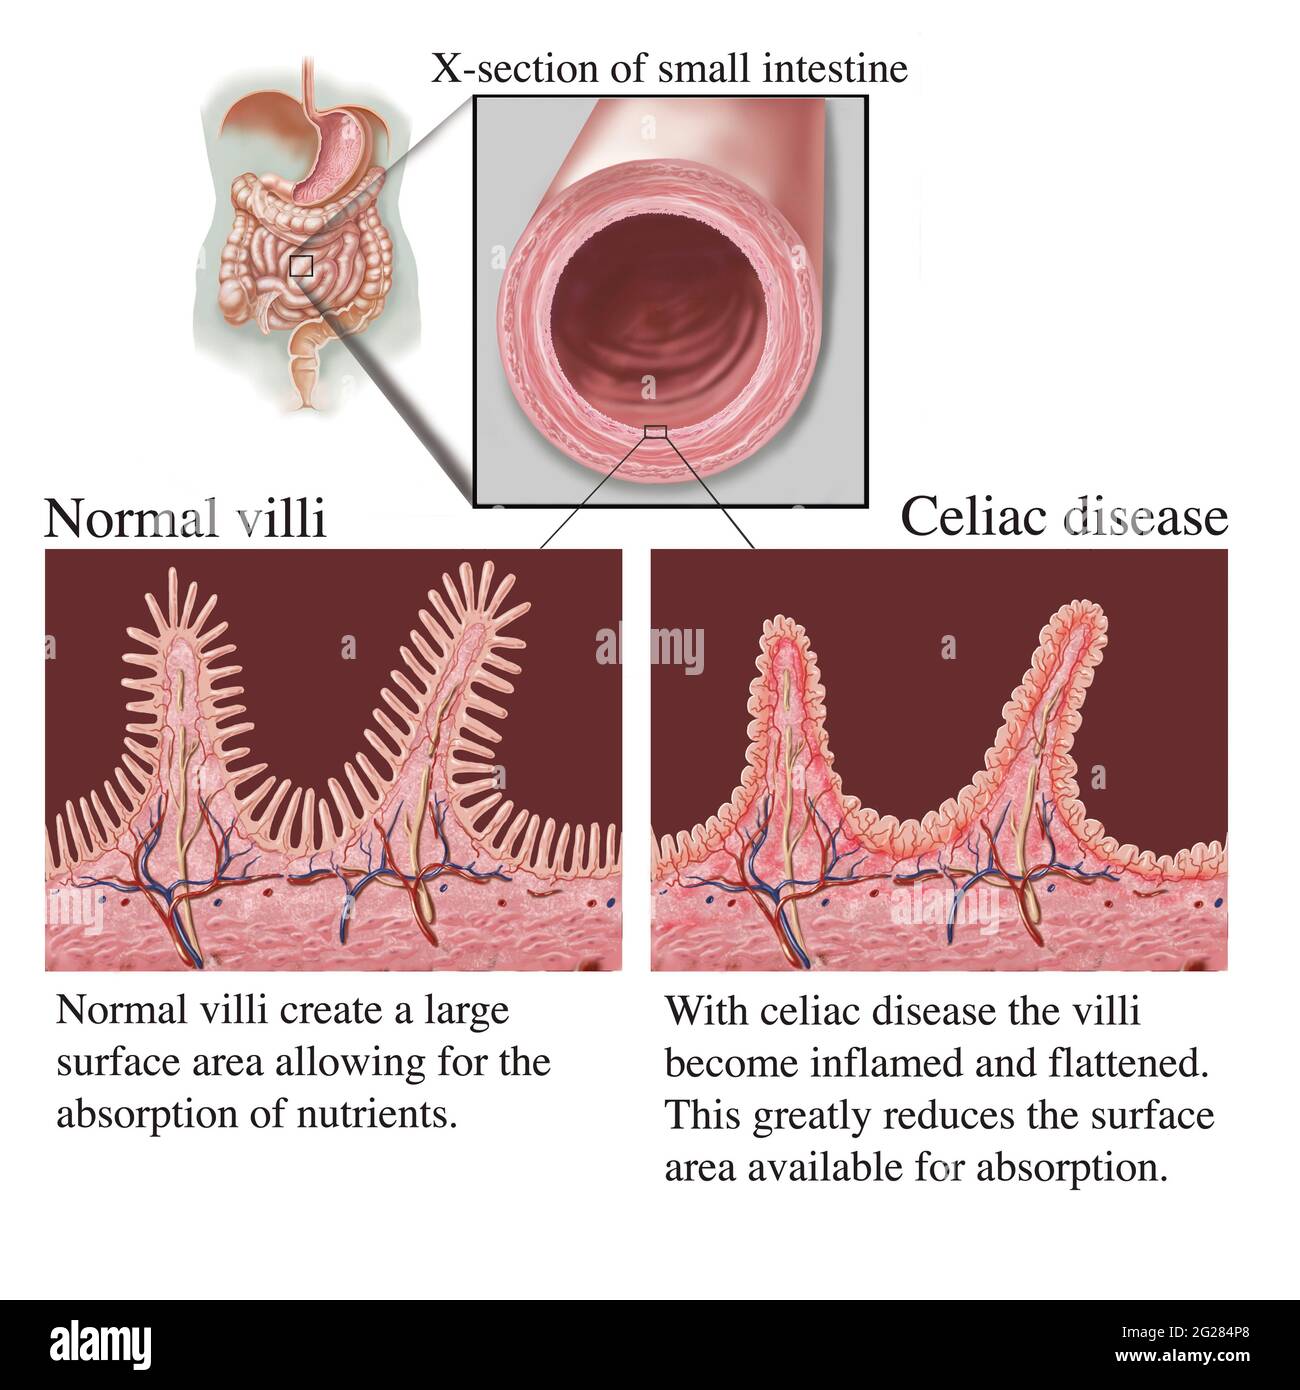 Cross section of intestine showing destruction of villi due to celiac disease, with text description. Stock Photo